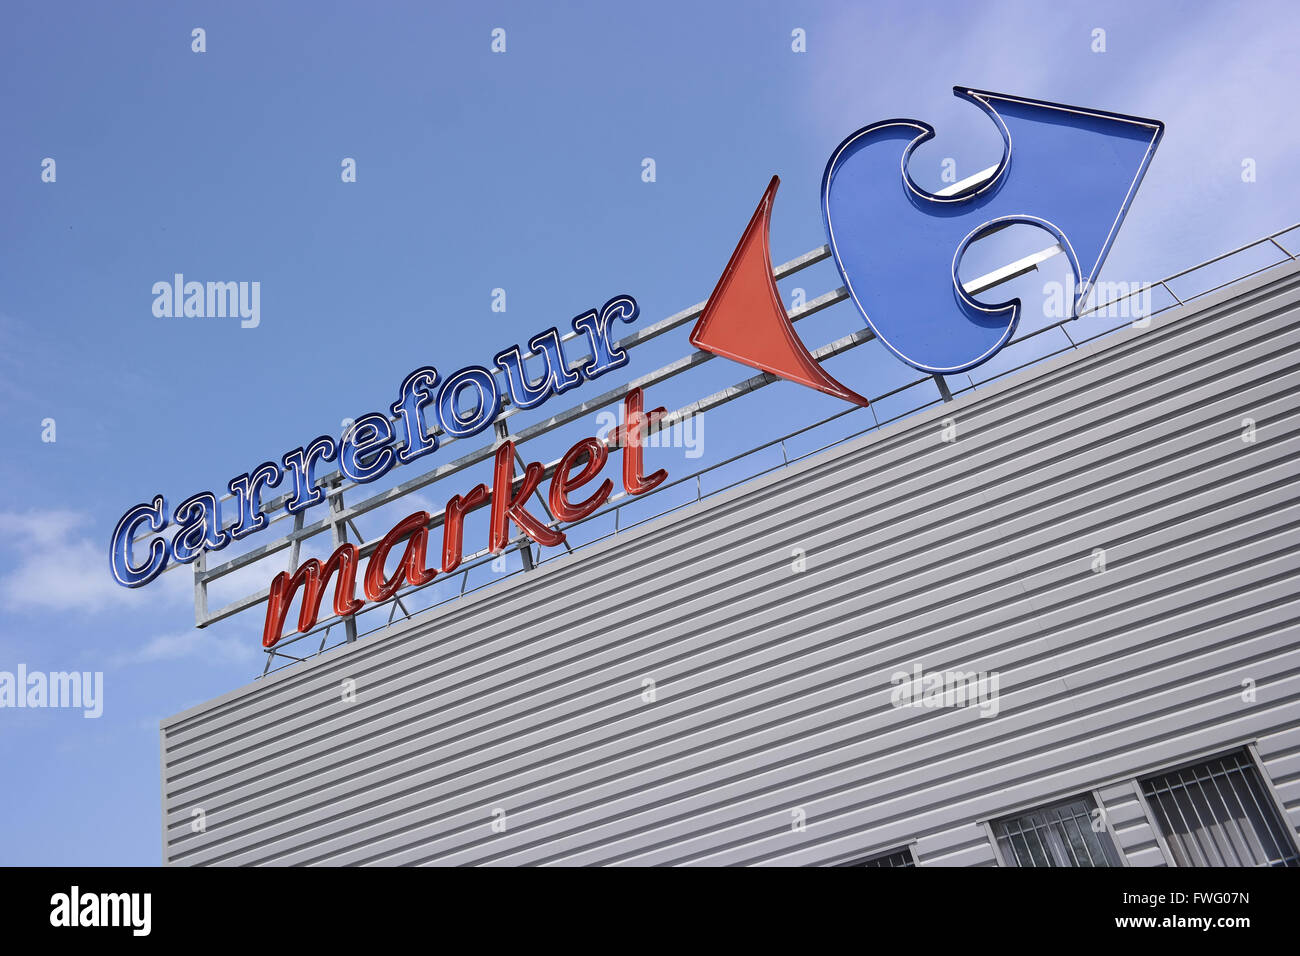 Carrefour market Stock Photo